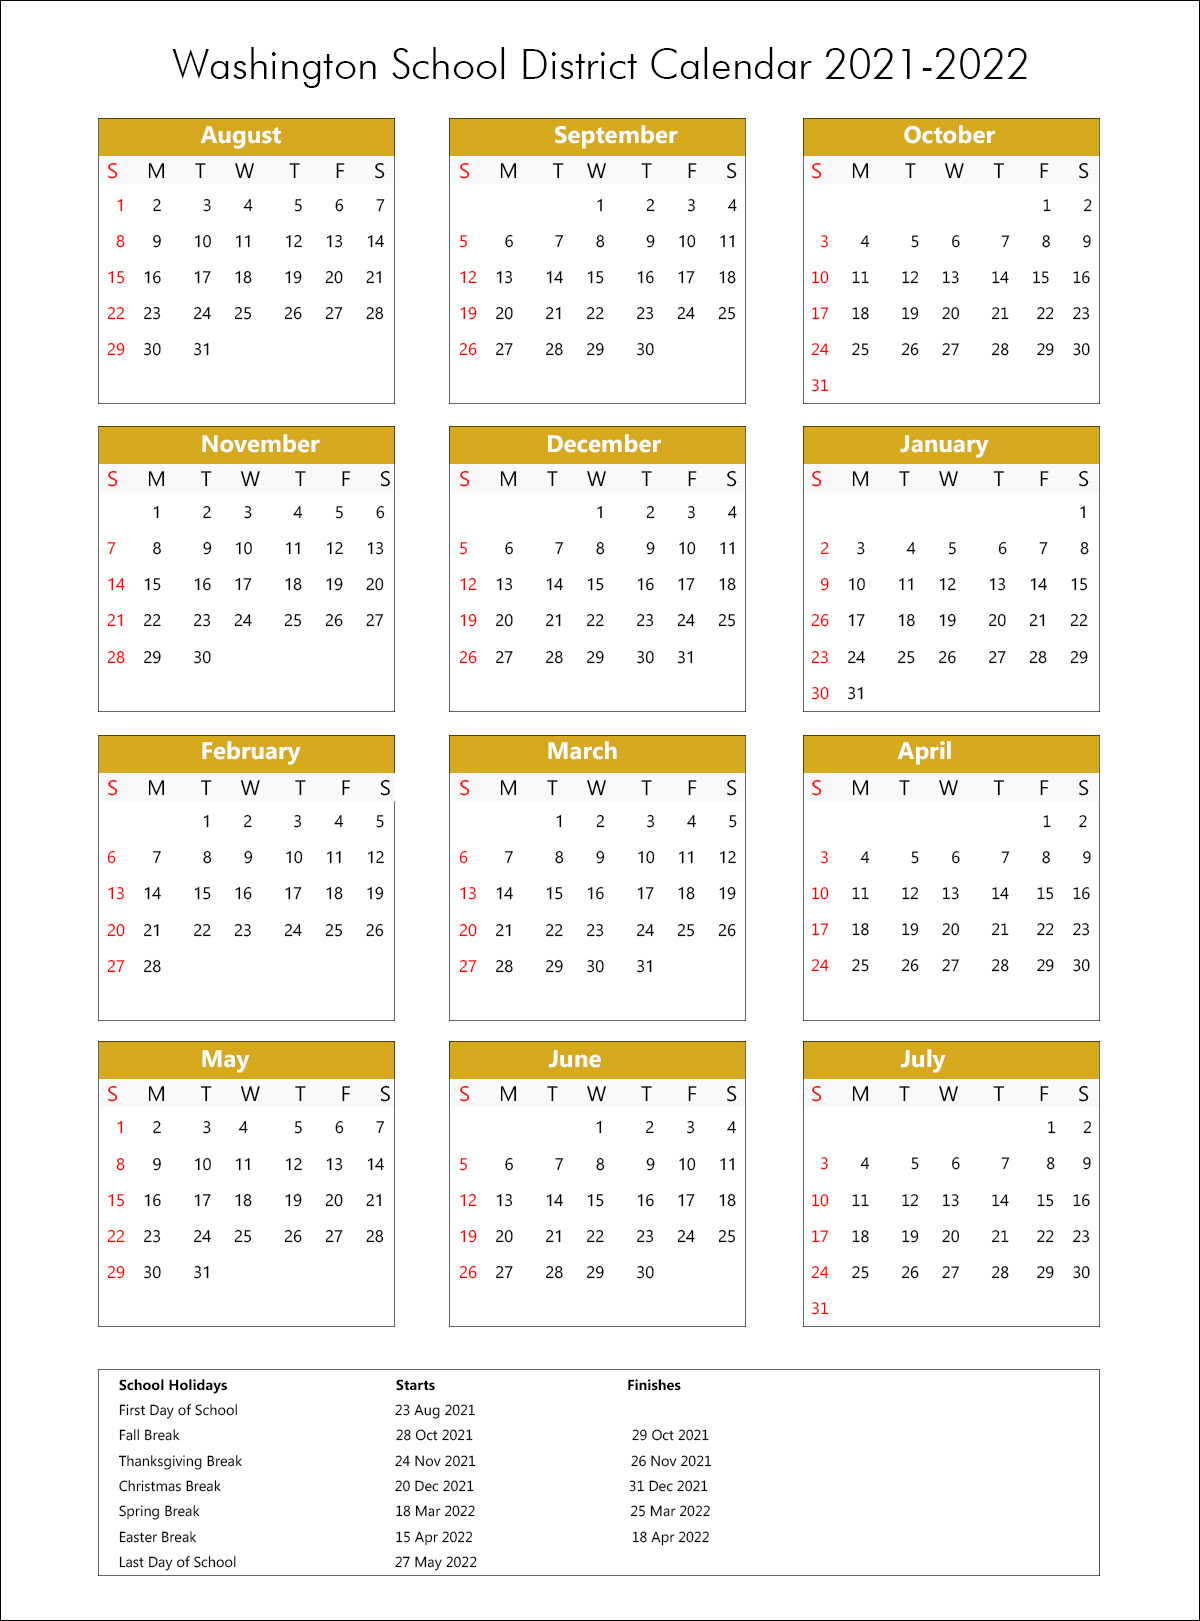 Washington School District Calendar 2021